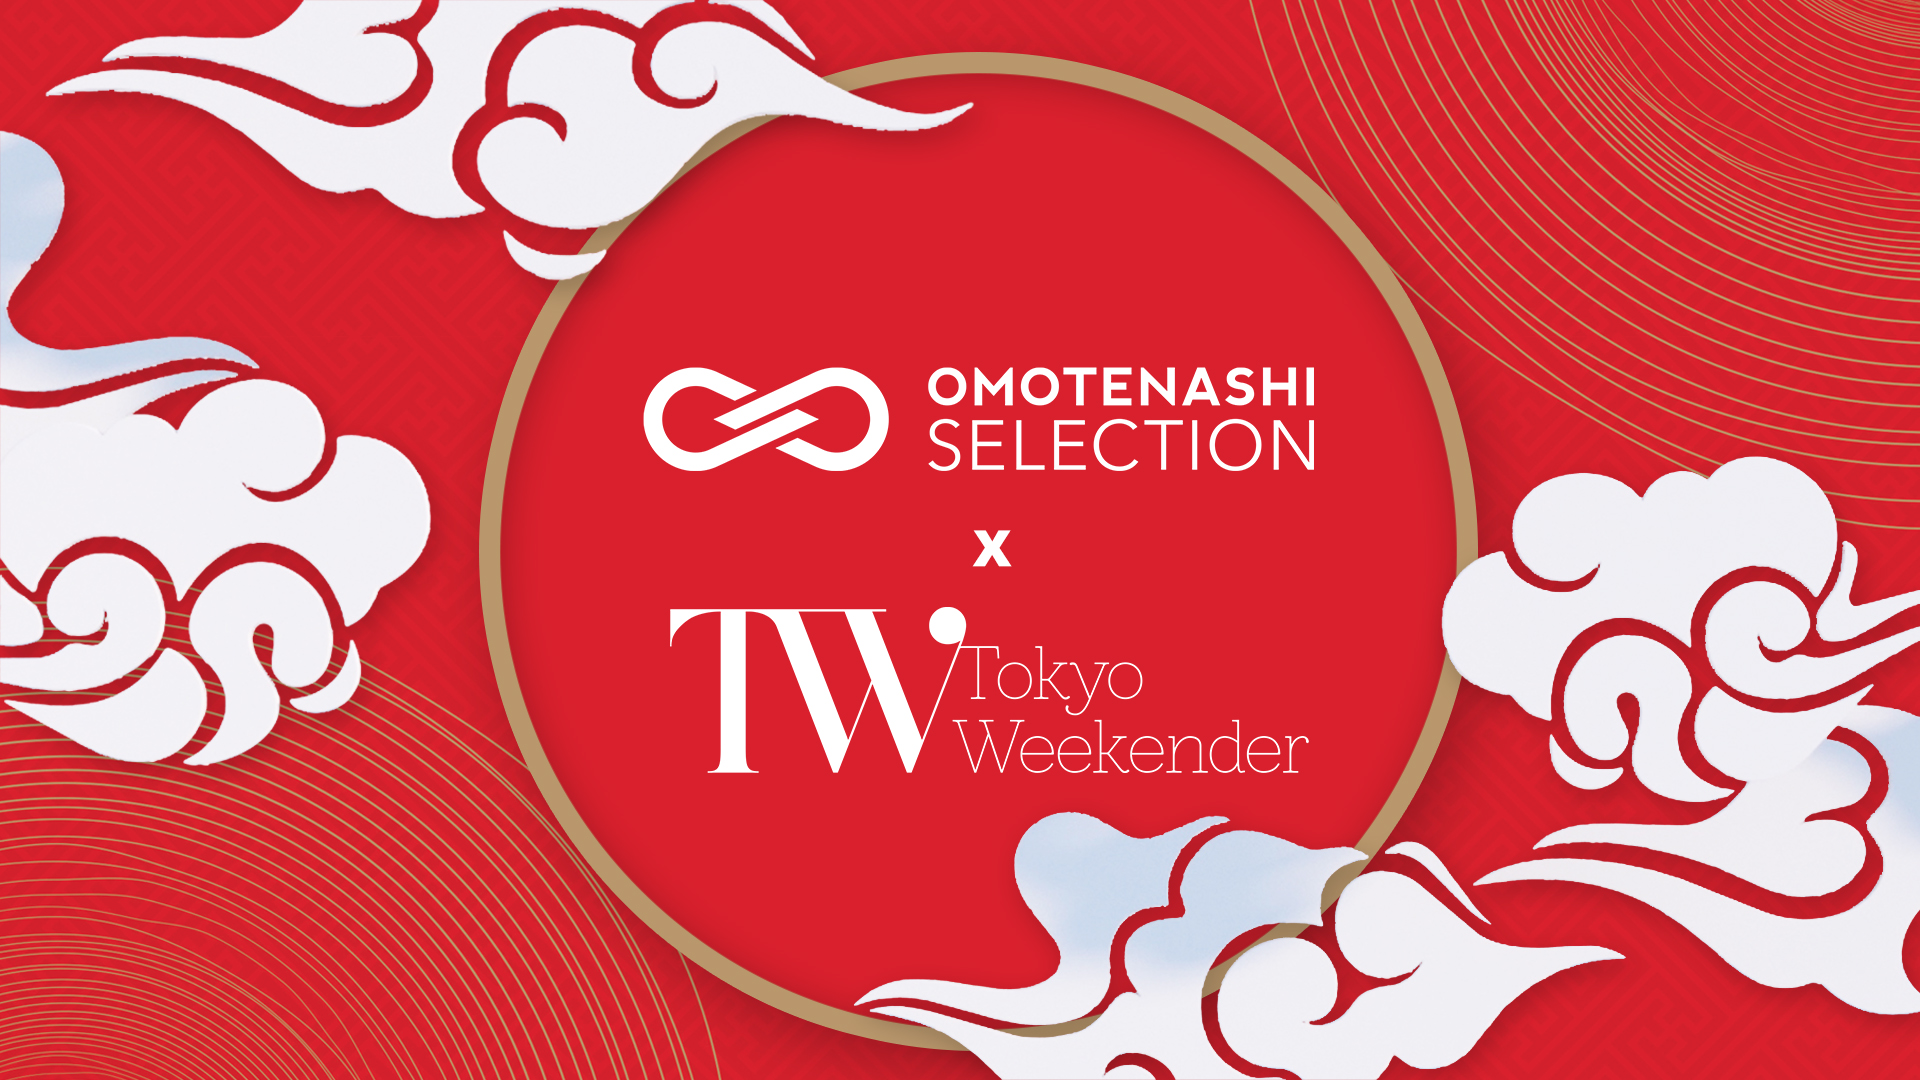 Tokyo weekender × OMOTENASHI Selection